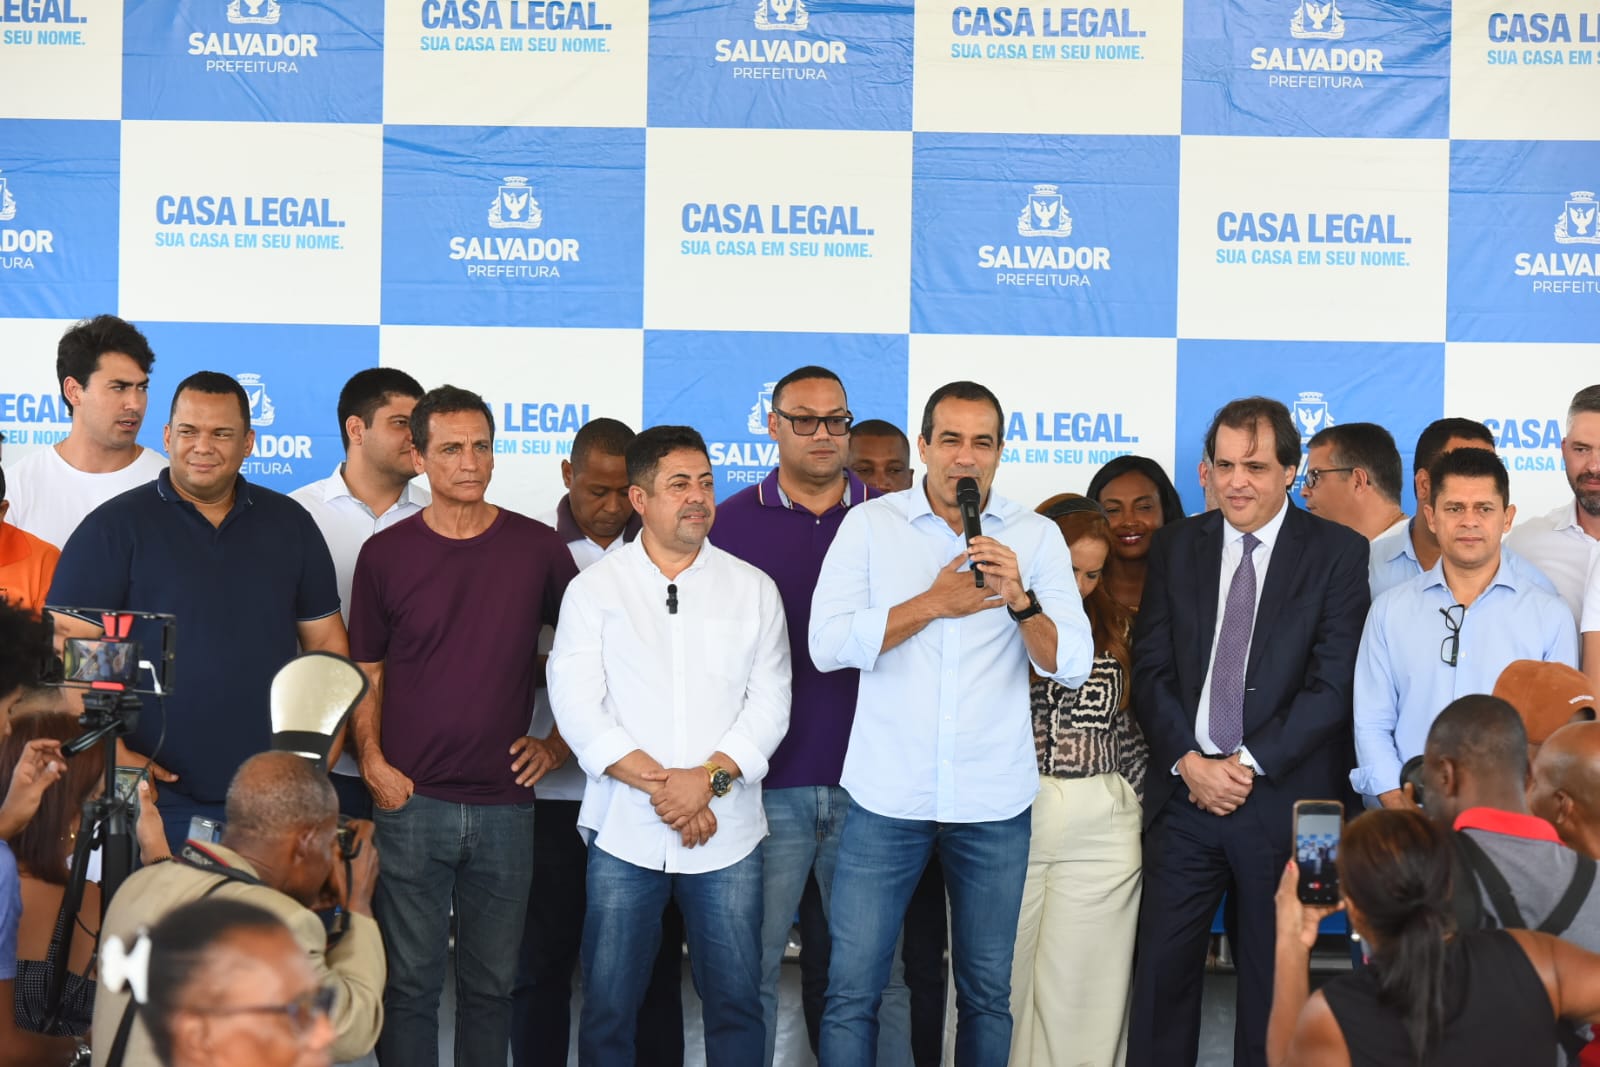 Prefeitura entrega mais de 600 títulos de propriedade ao Bairro da Paz pelo programa Casa Legal